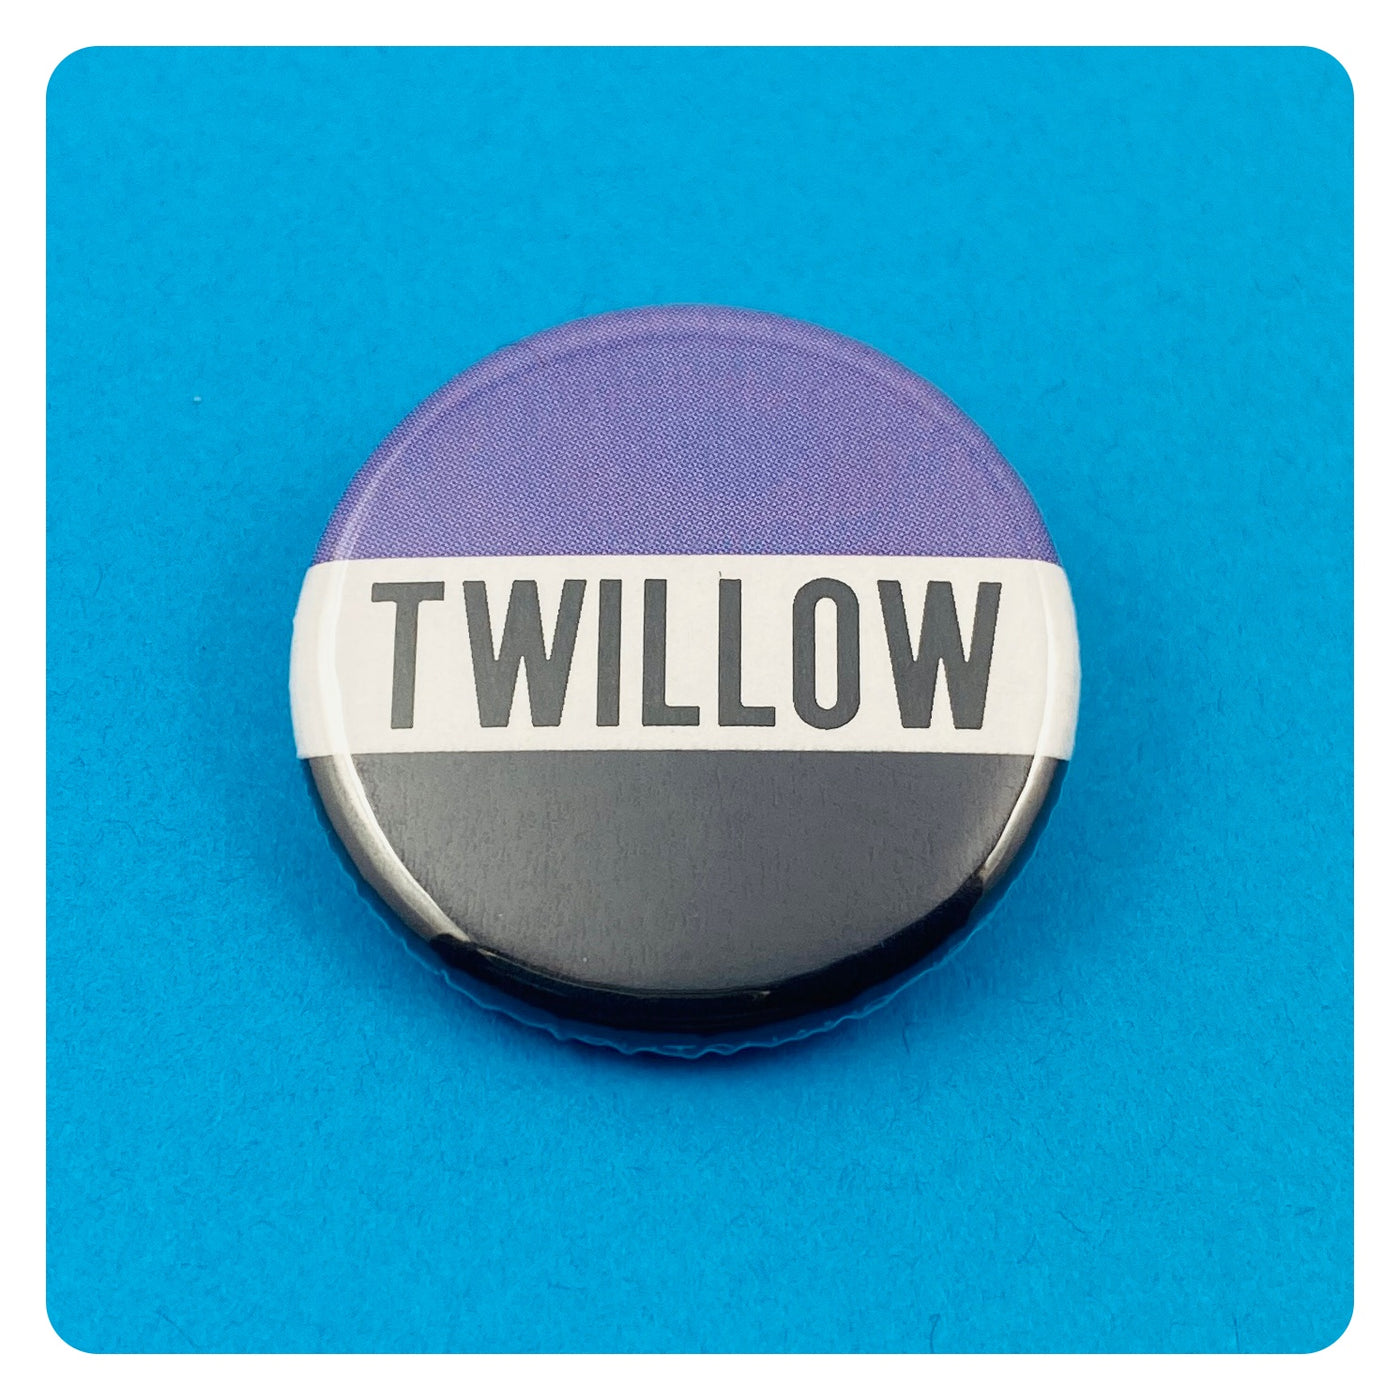 Twillow Ship Button